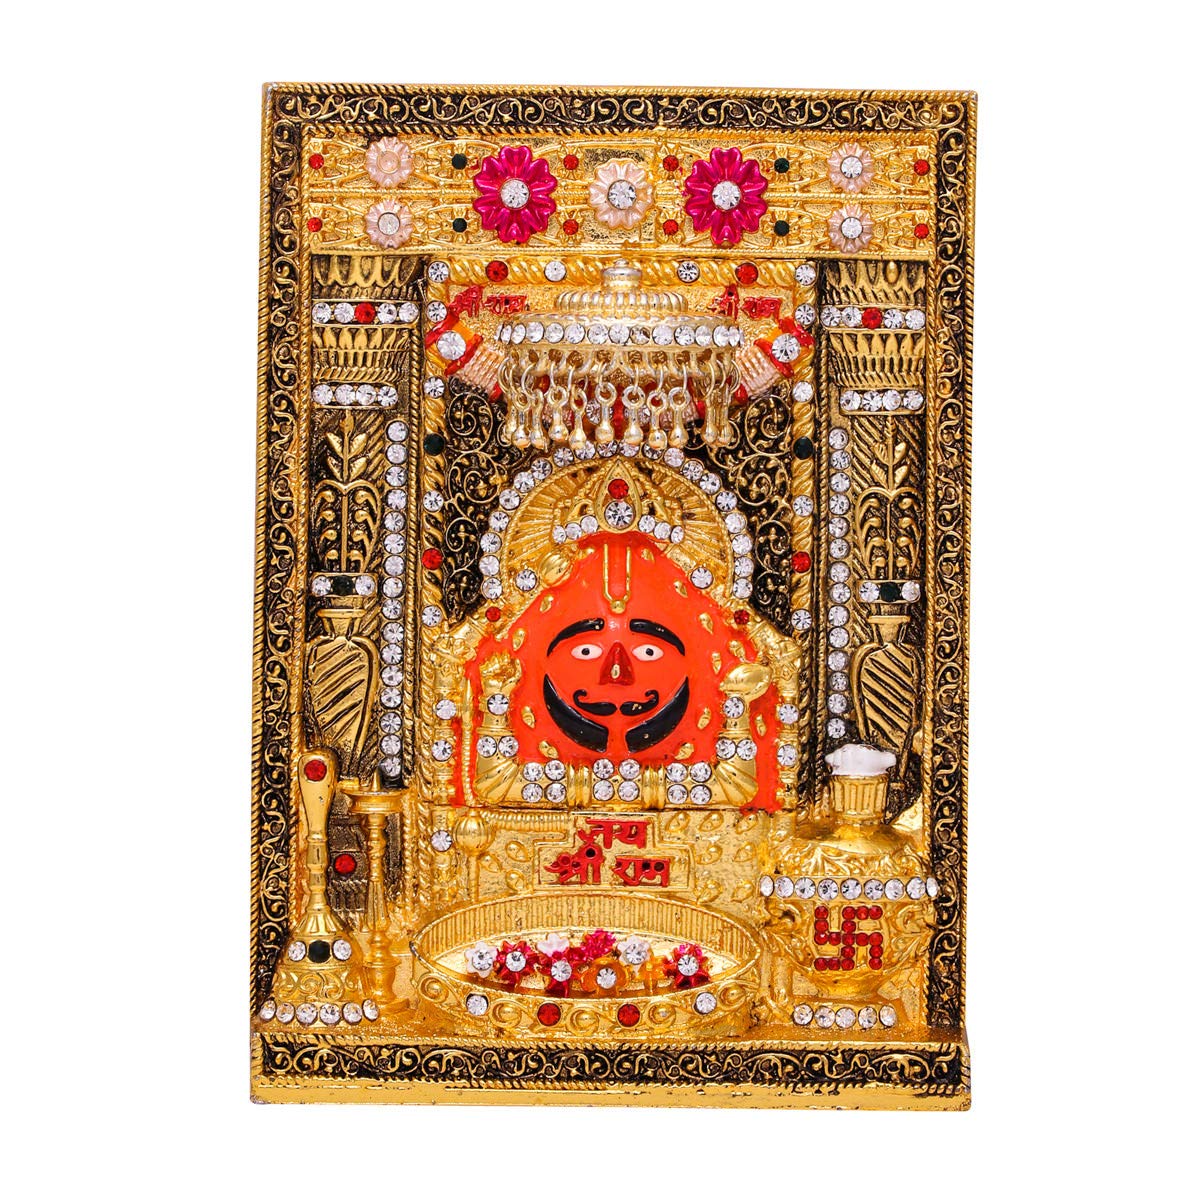 Buy Divine Gifts Salasar Balaji /Hanuman God Bajrangbali Mahavir Statue Table Showpiece Brass Idols (Multi Coloured) Online At Low Prices In India